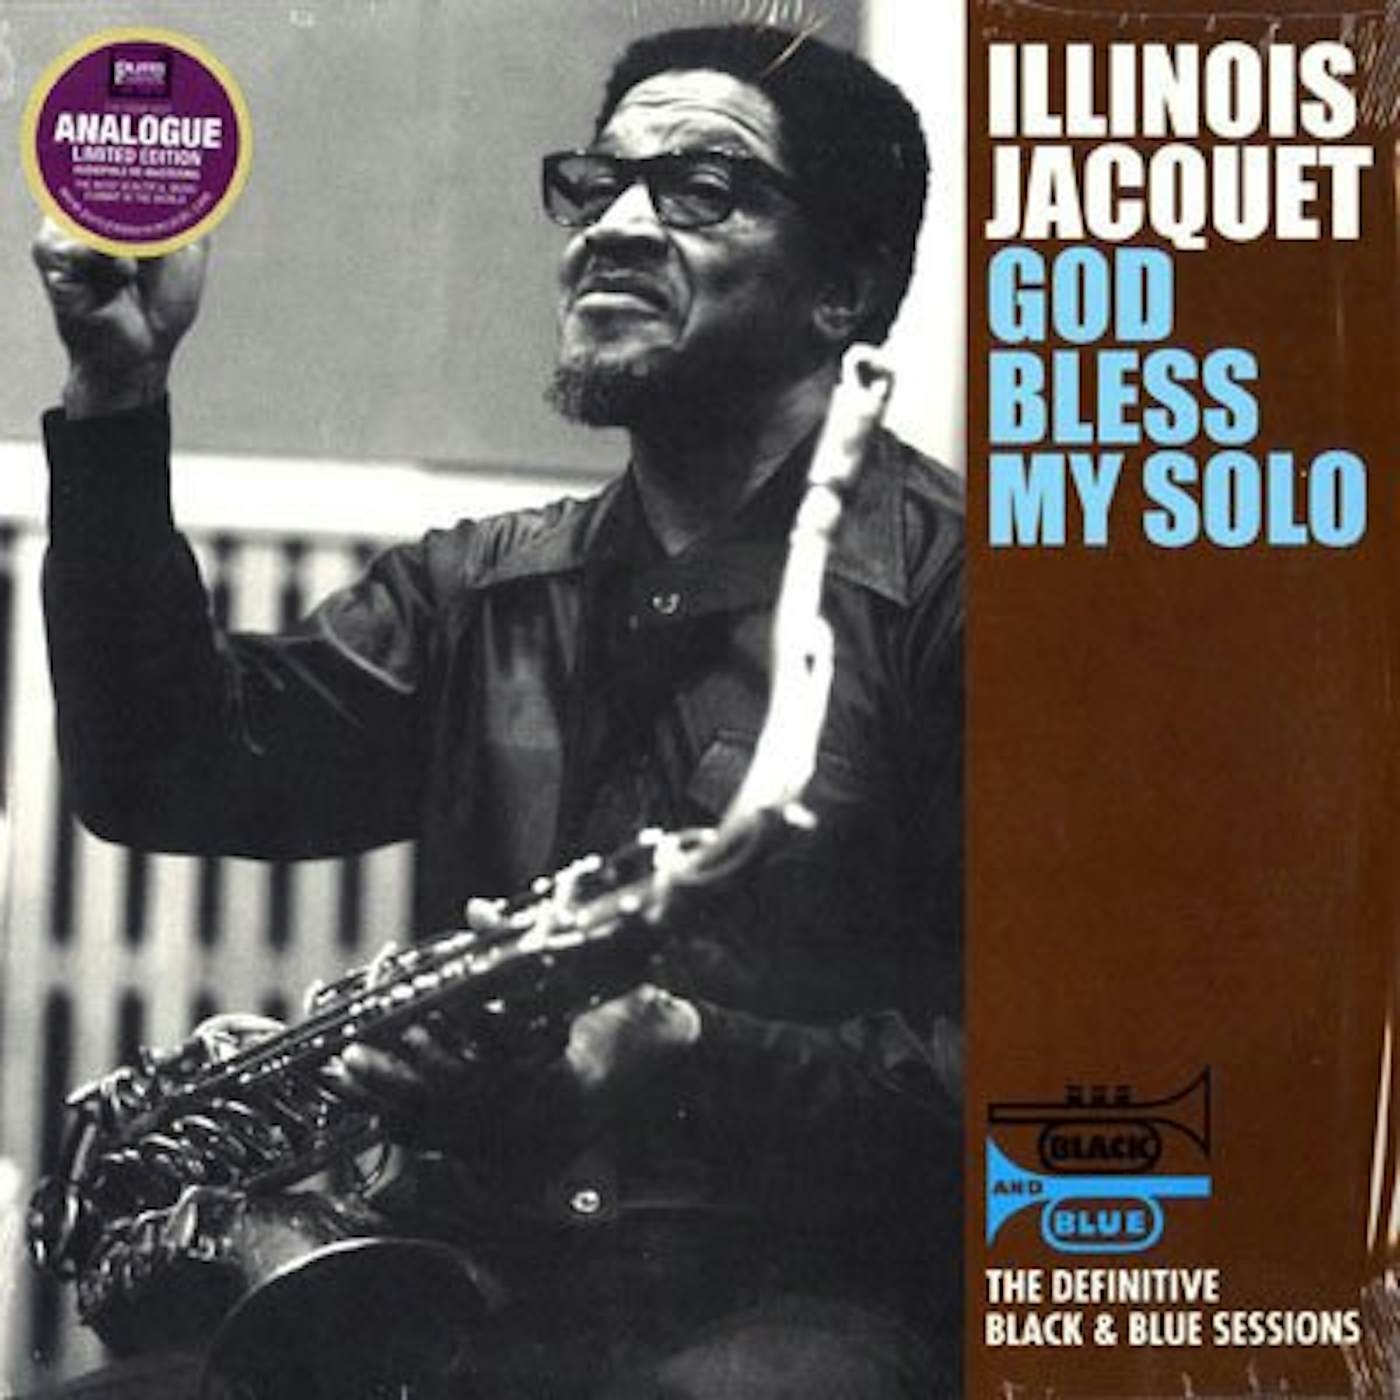 Illinois Jacquet God Bless My Solo Vinyl Record